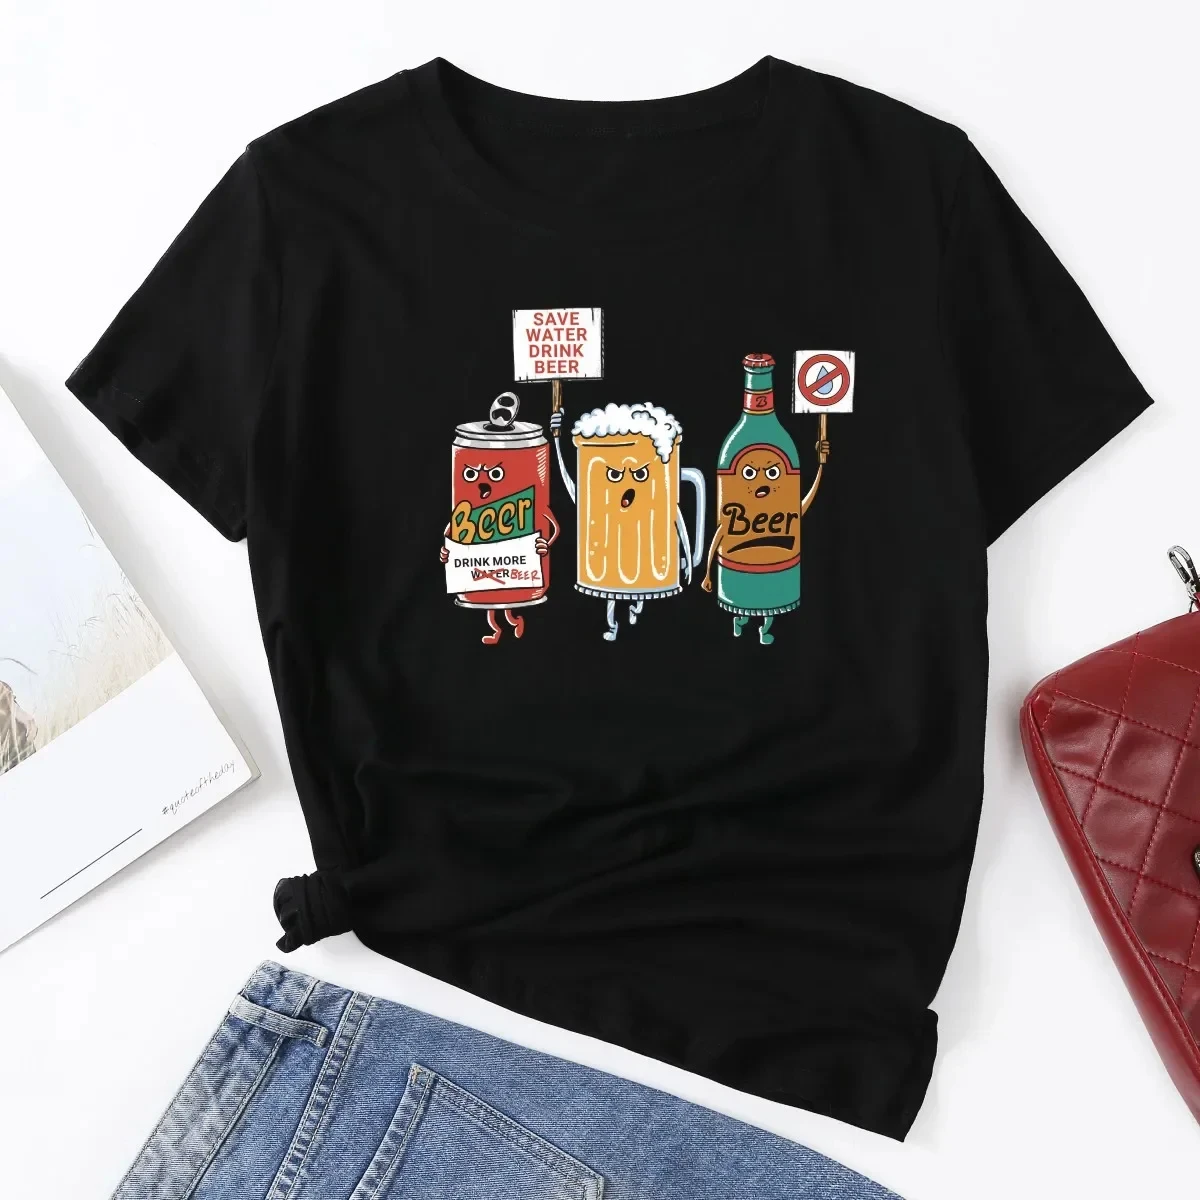 

Summer Short Sleeve Tops Ropa Mujer Harajuku Aesthetic Graphic Tshirts Kawaii Humorous Save Water Drink Beer Woman TShirt